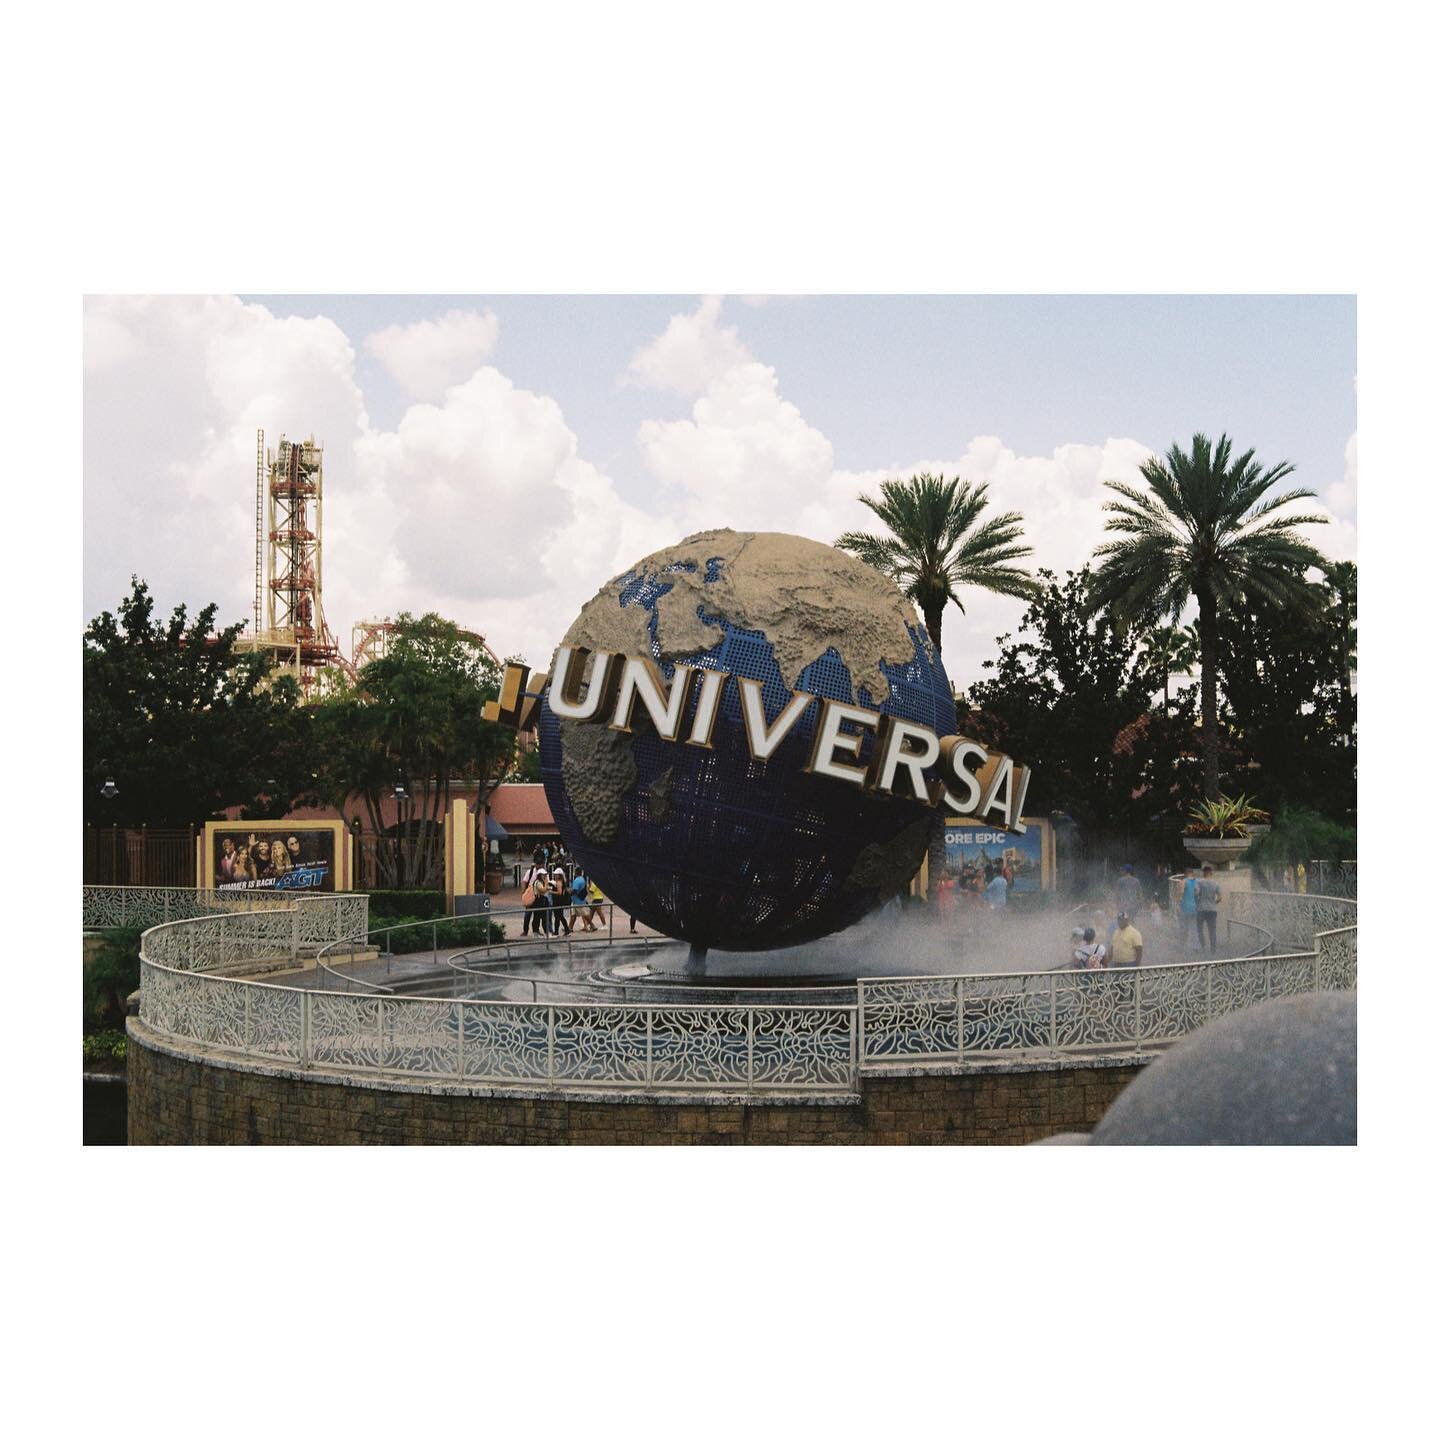 Universal Studios Orlando Part 1 of 2. All shot on film. 
.
.
.
#shotonfilm #filmphotography #filmphotoshoot #filmphotographer #filmlife #universalstudios #universalstudiosorlando #universalorlando #